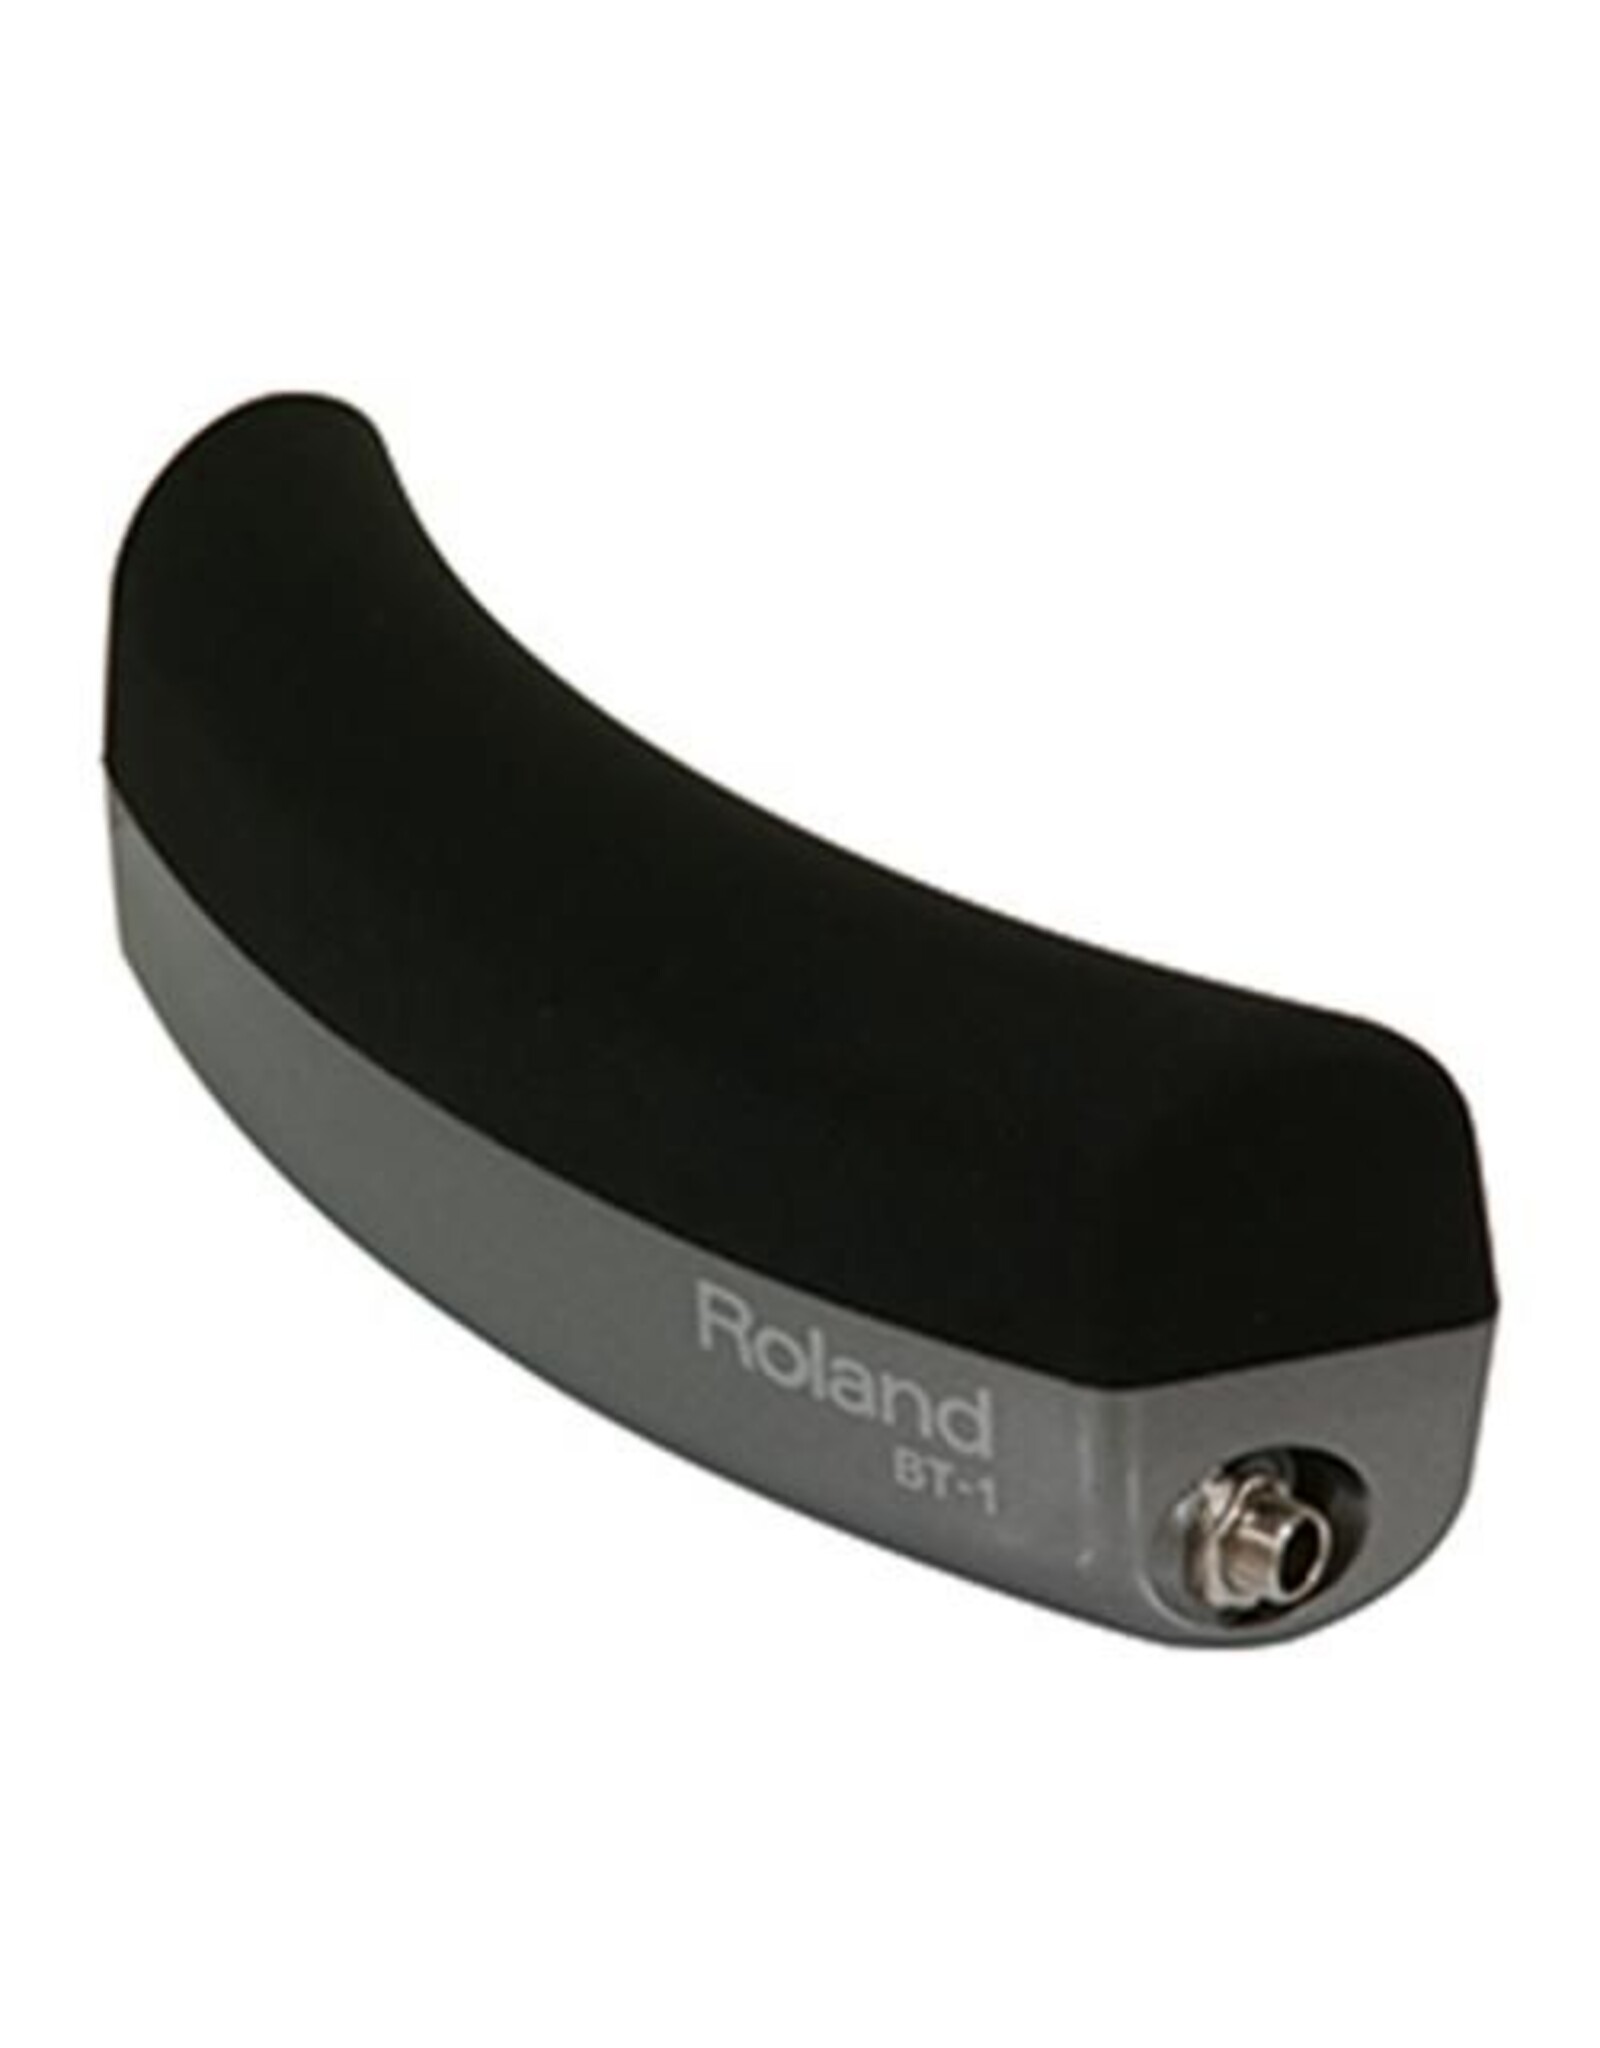 Roland GT-1 store demo bar trigger pad